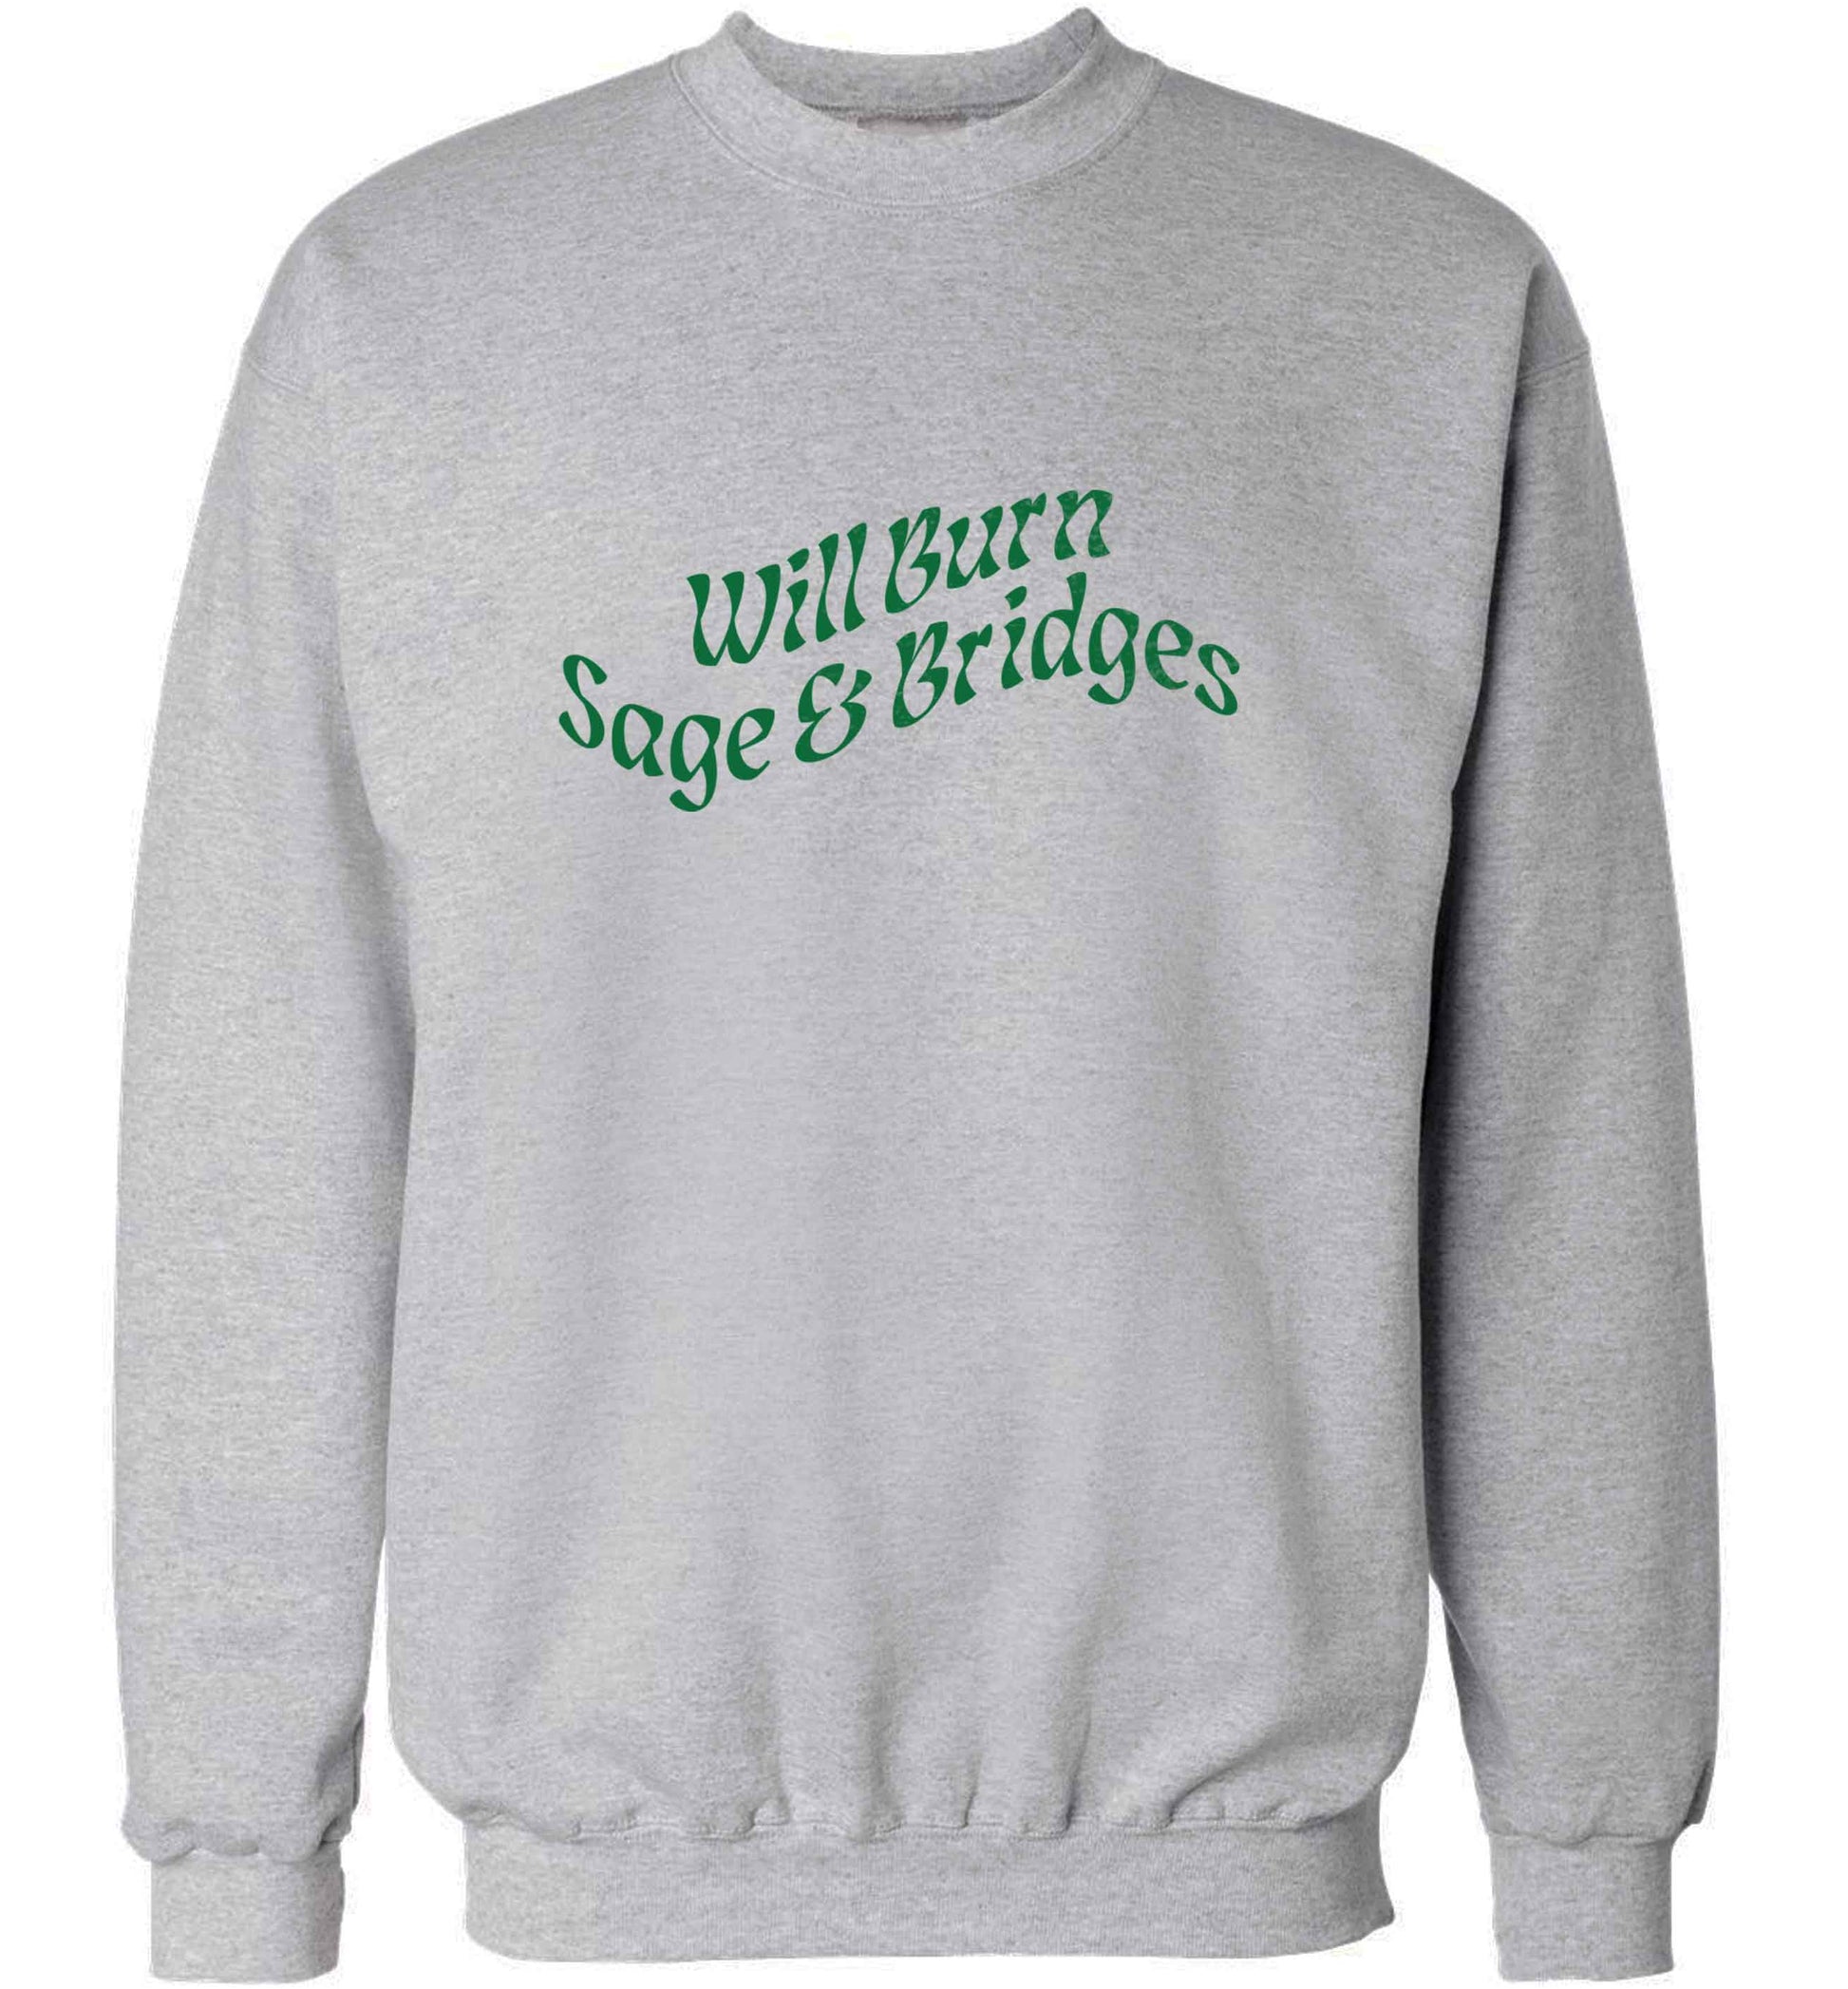 Will burn bridges and sage adult's unisex grey sweater 2XL